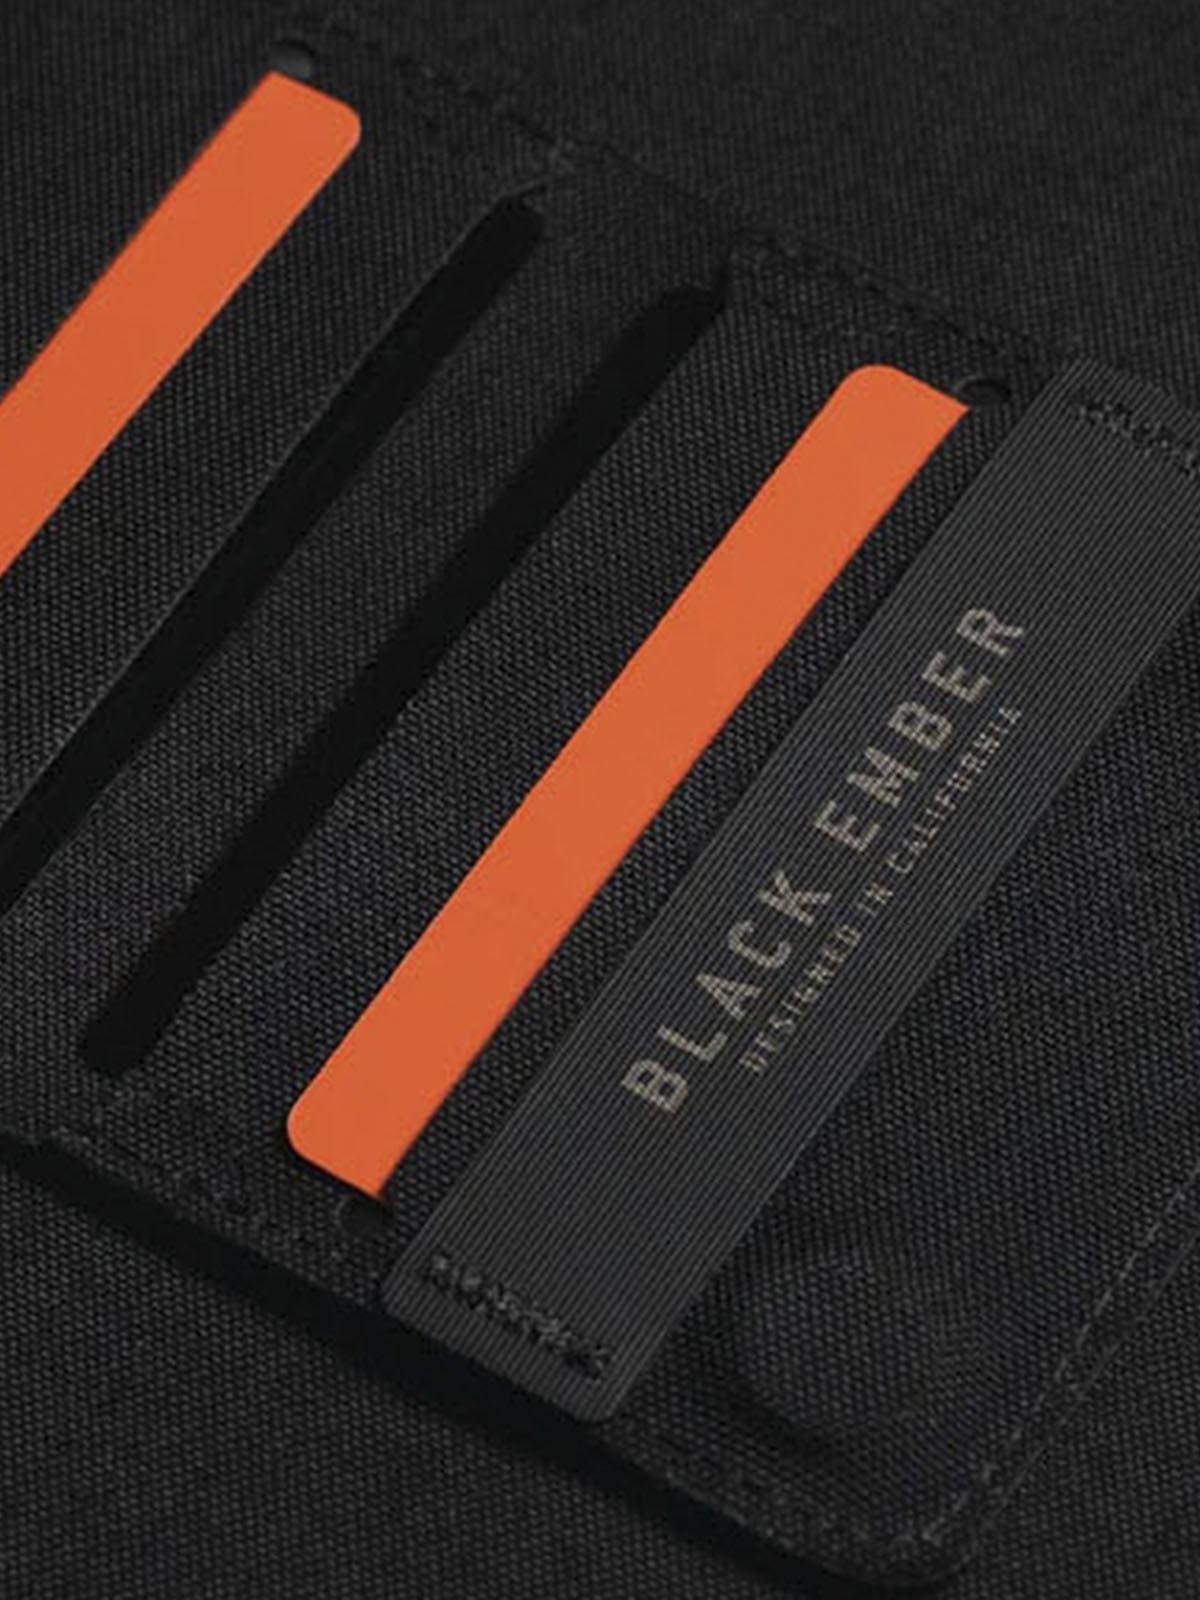 Black Ember Mag-Fold Wallet